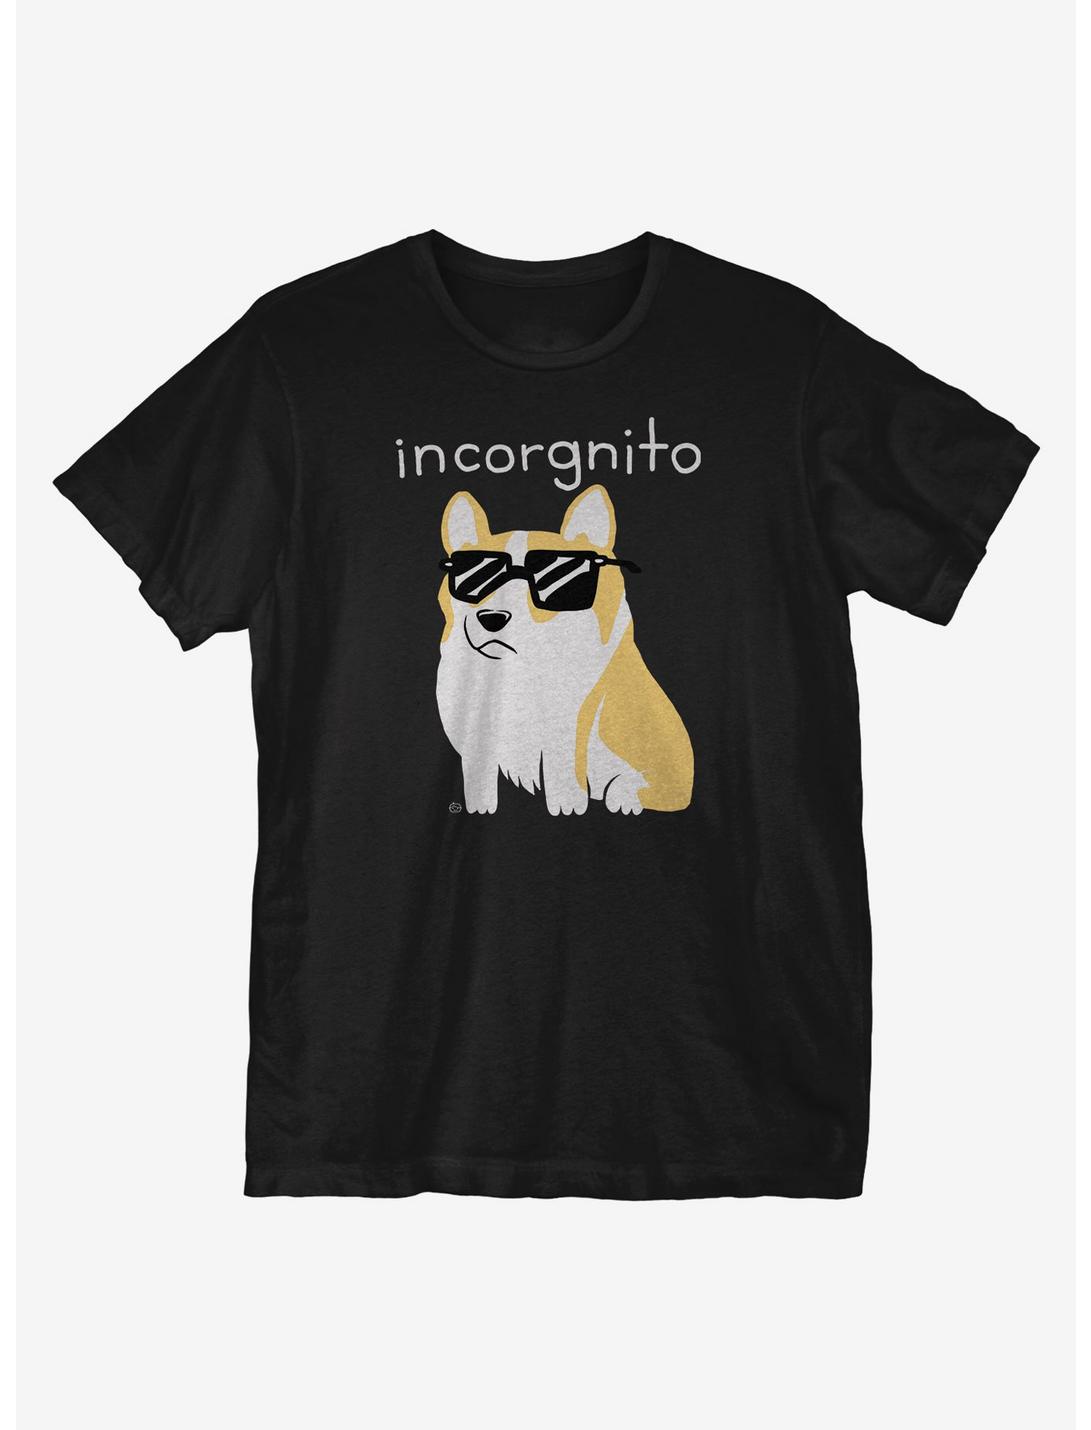 Incorgnito T-Shirt, BLACK, hi-res